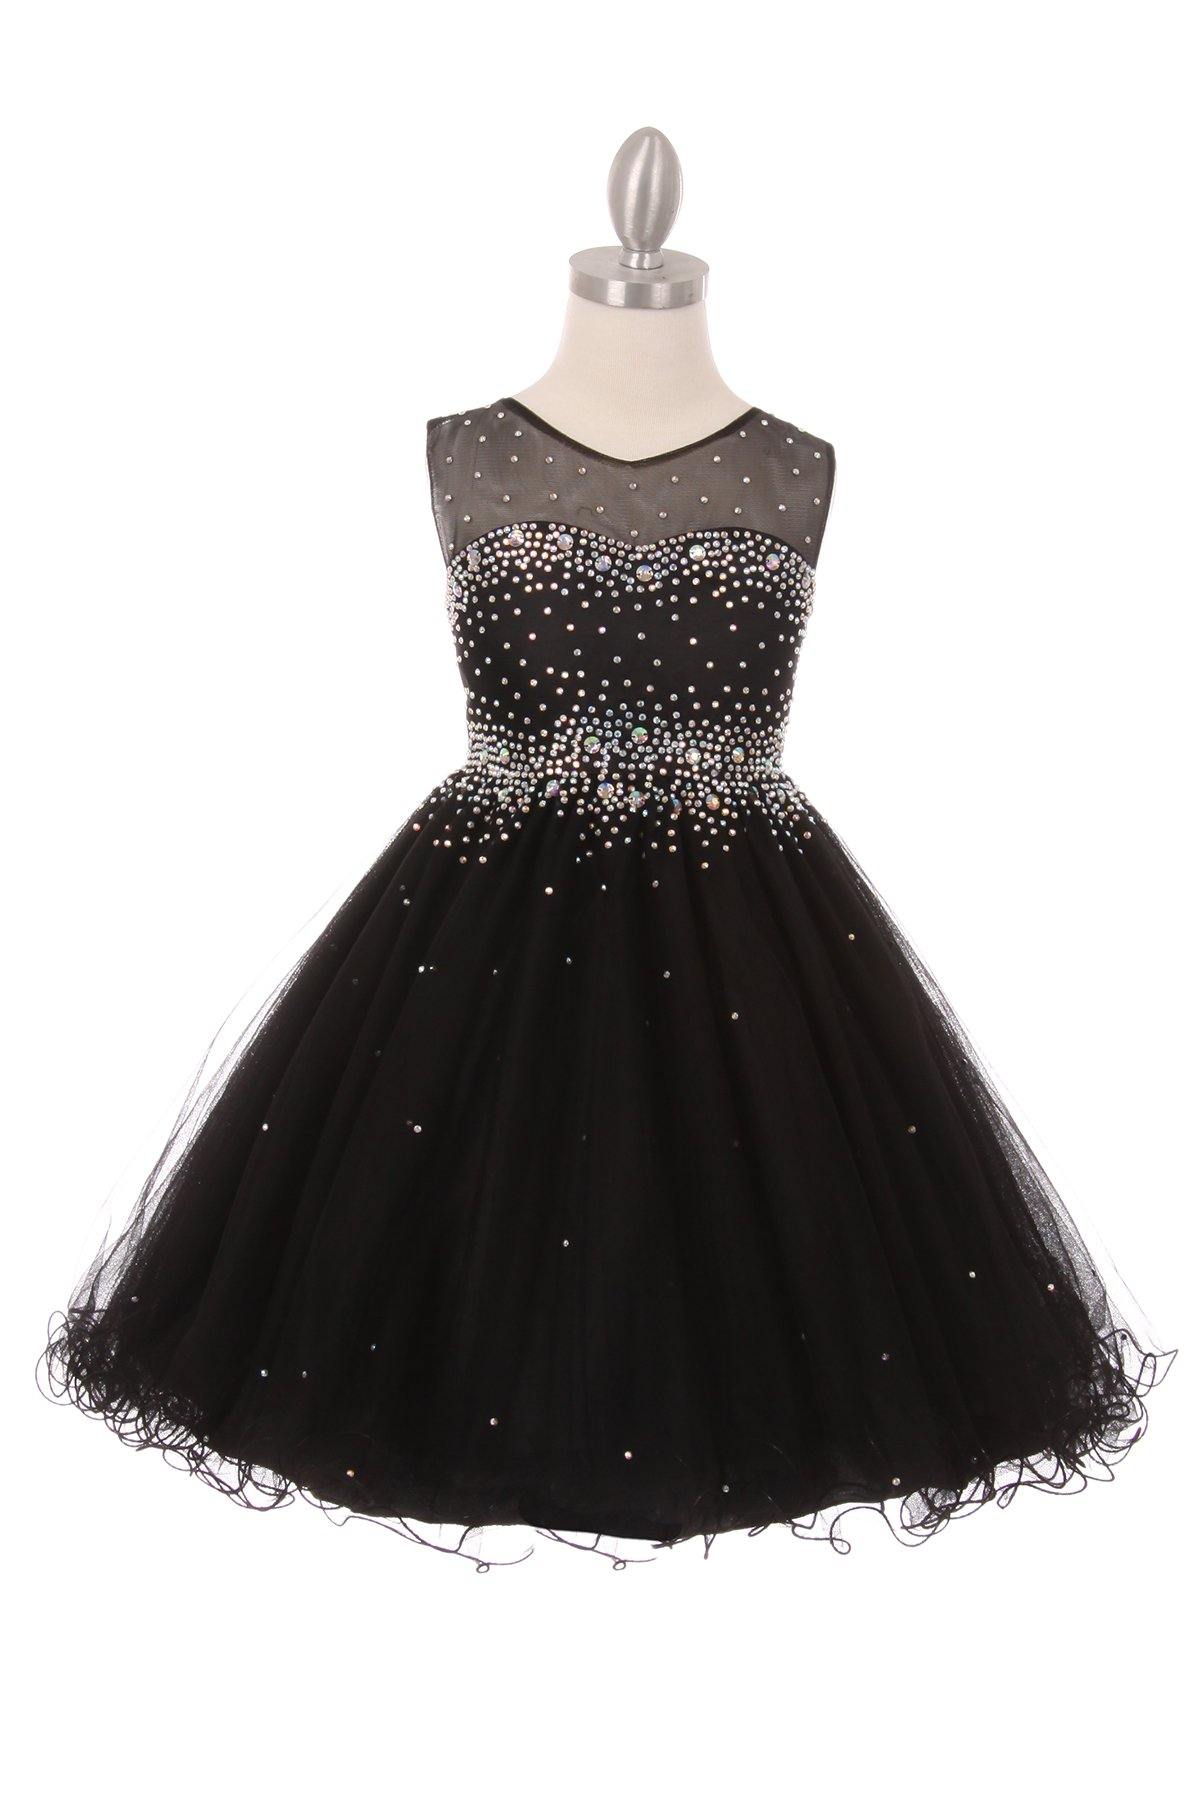 Sleeveless Illusion Neckline Sparkle Flower Girl Dress - The Dress Outlet Cinderella Couture